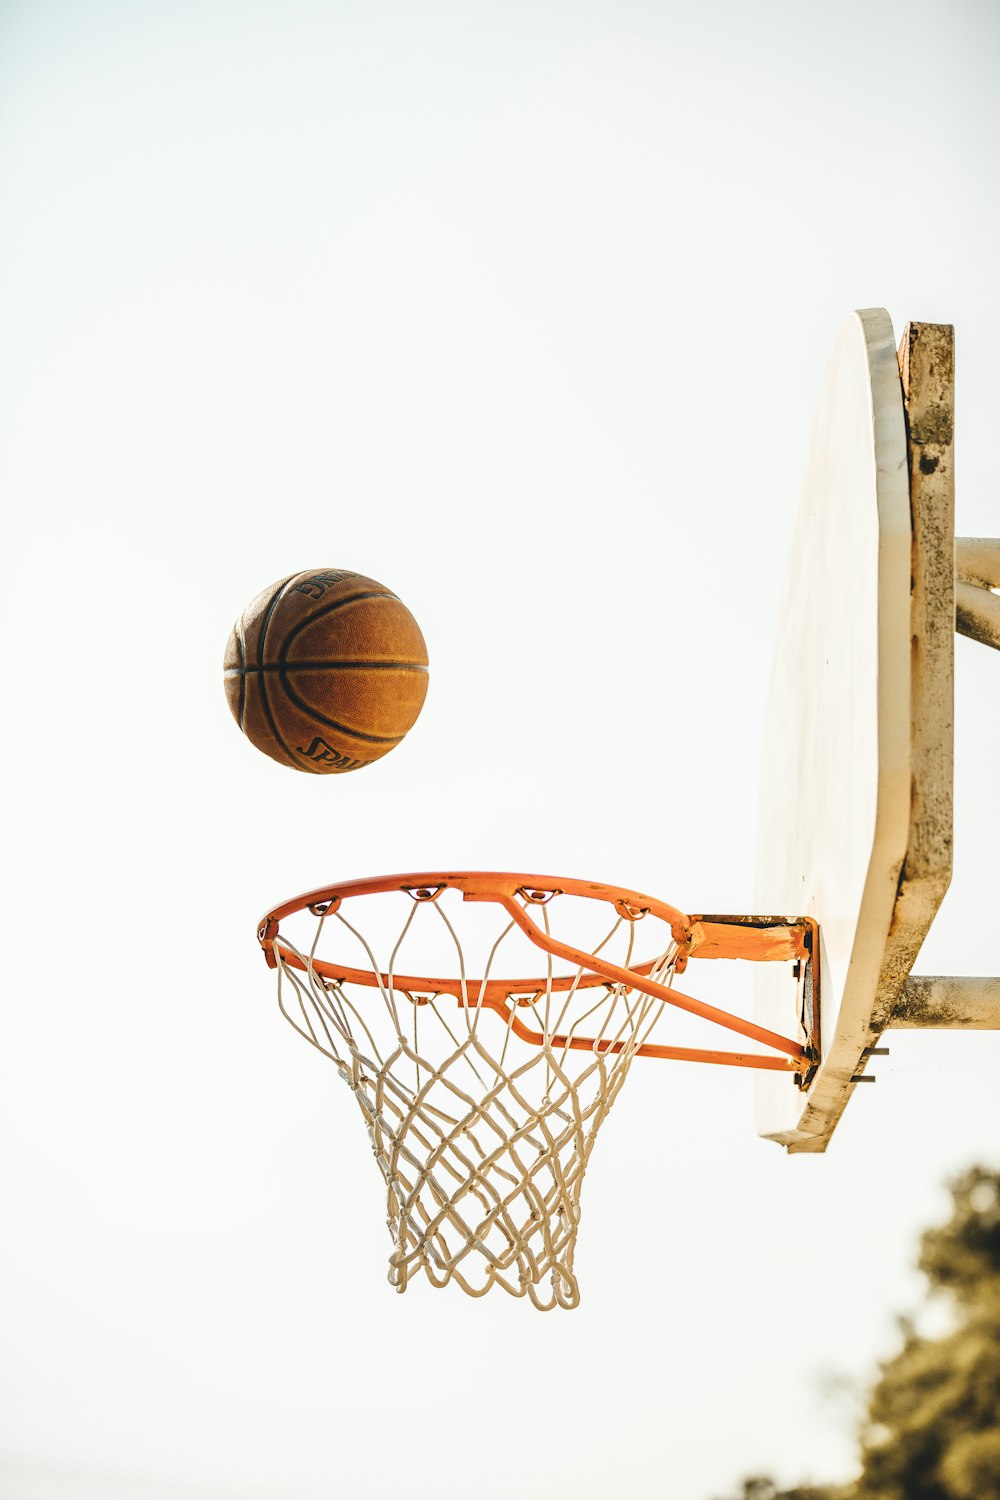 Basketball on basketball hoop with white background photo – Free San  francisco Image on Unsplash